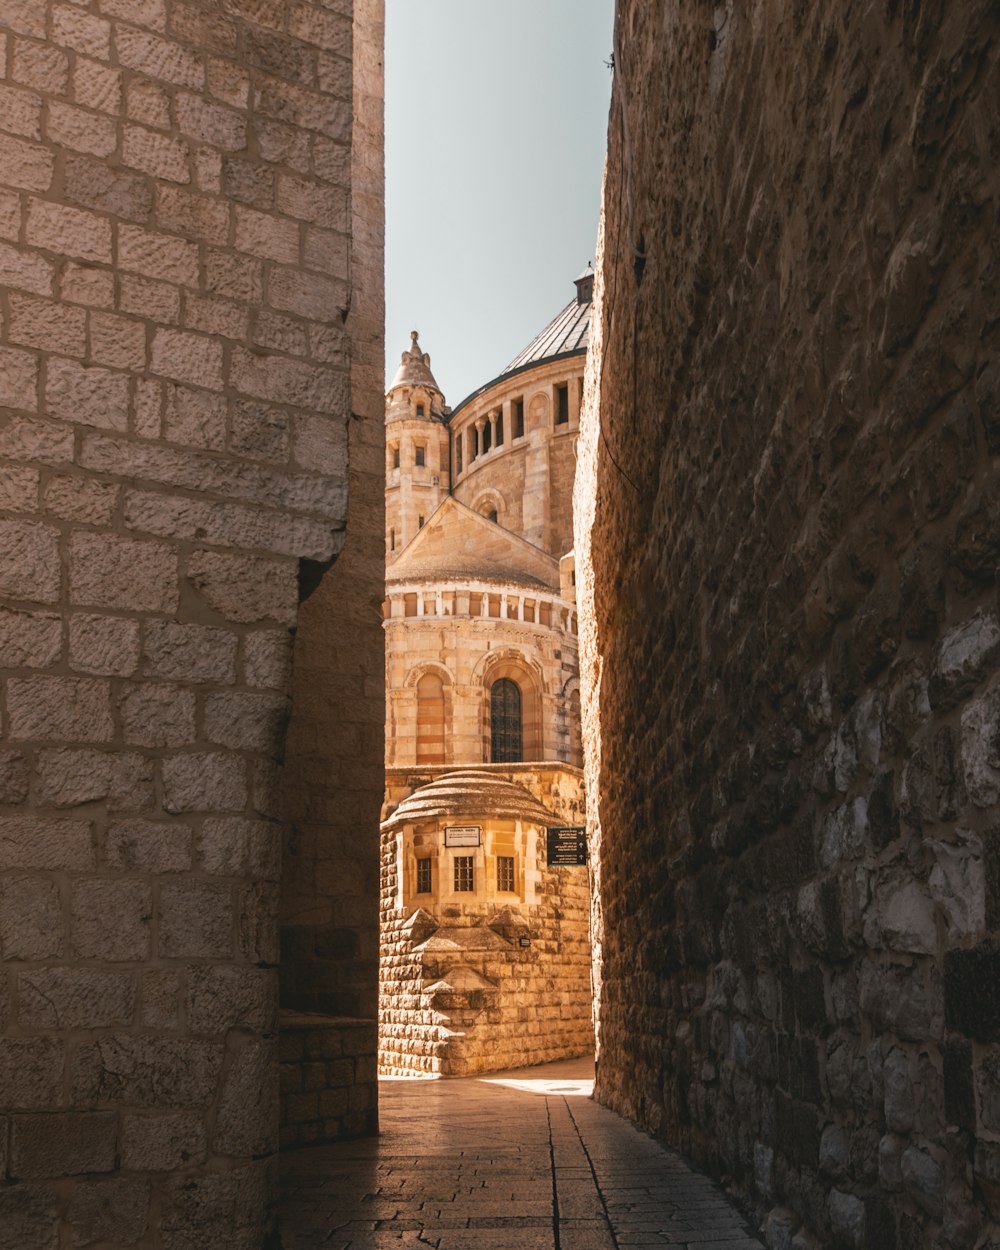 pathway in between of bricked buildings through castle